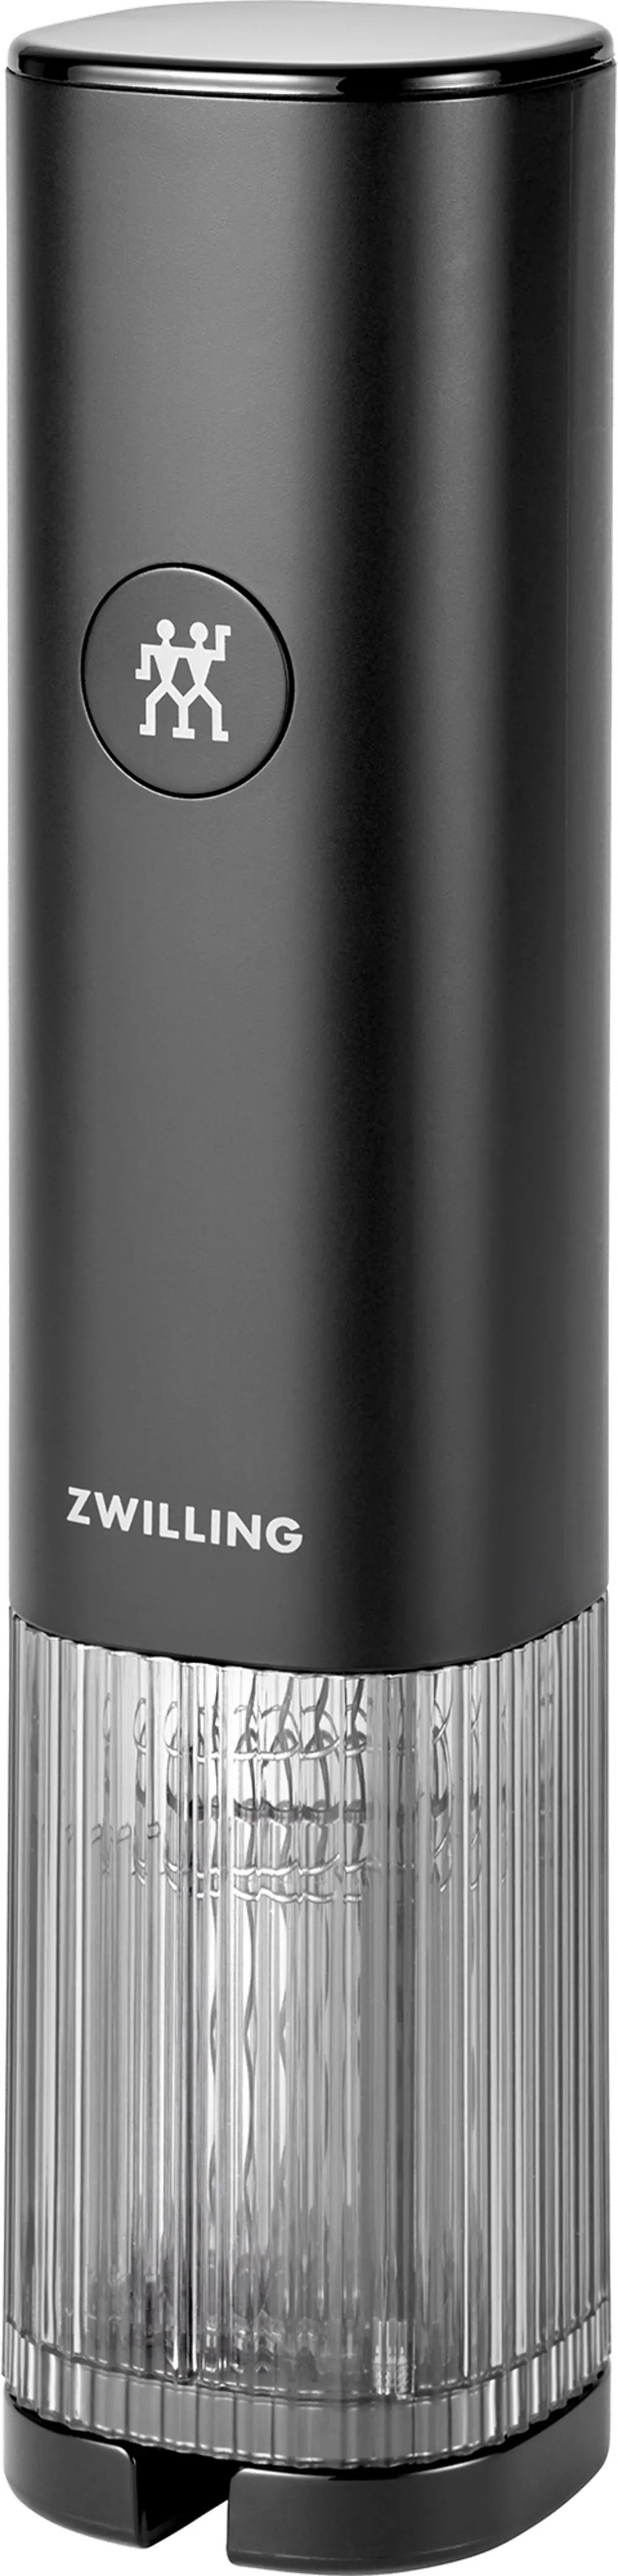 ZWILLING Enfinigy Electric Wine Bottle Opener - Black-1